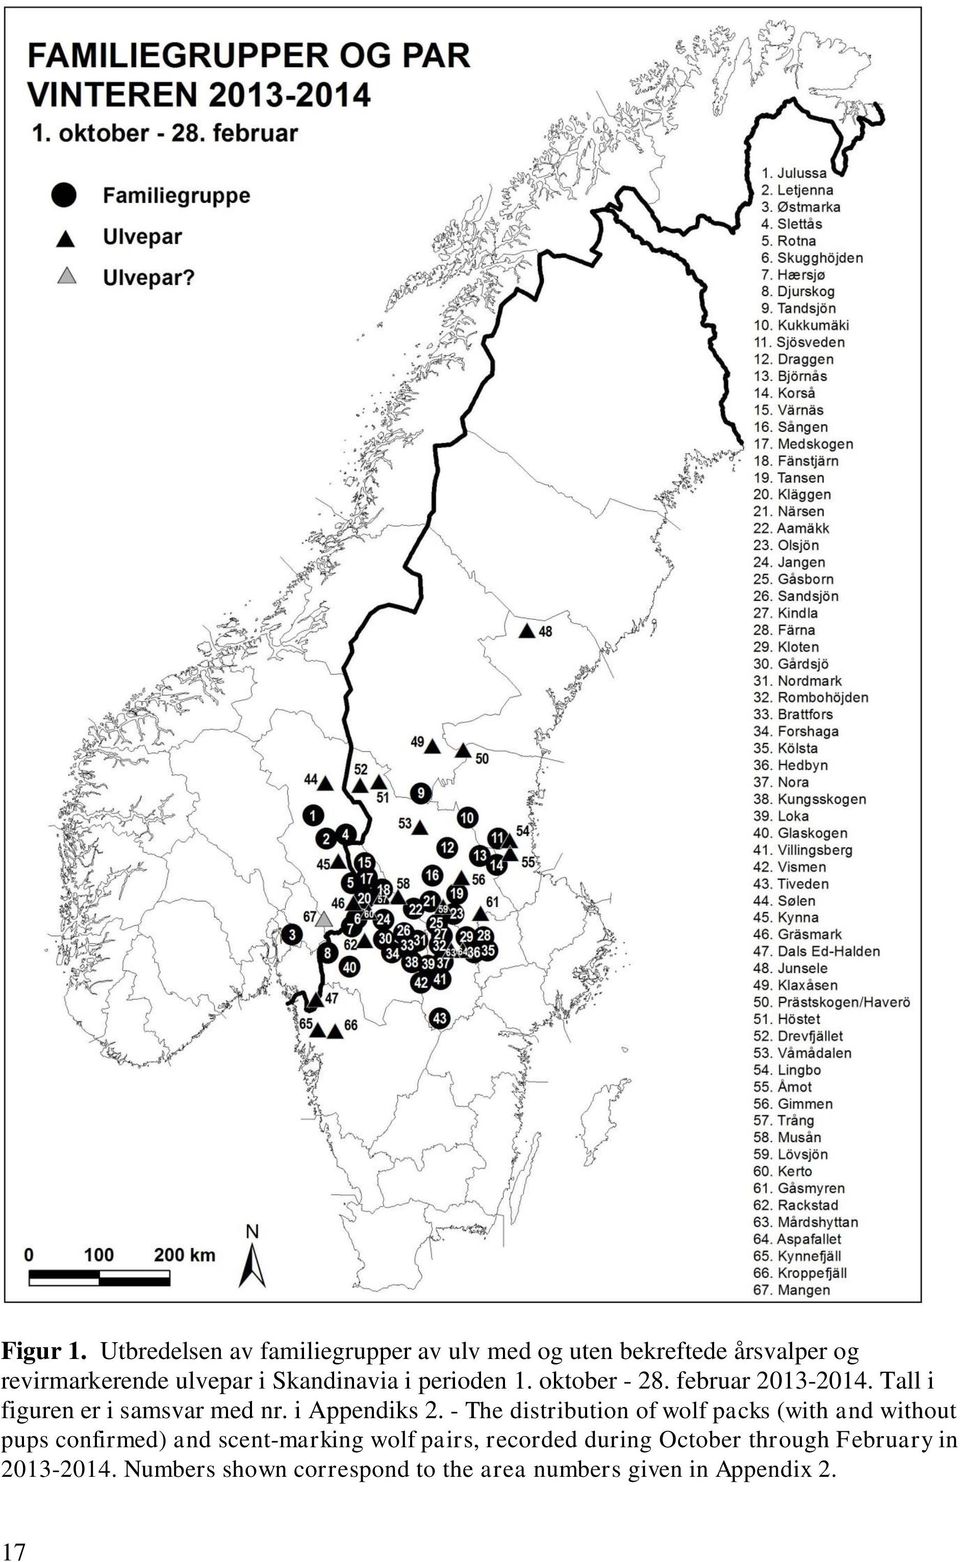 Skandinavia i perioden 1. oktober - 28. februar 2013-2014. Tall i figuren er i samsvar med nr. i Appendiks 2.